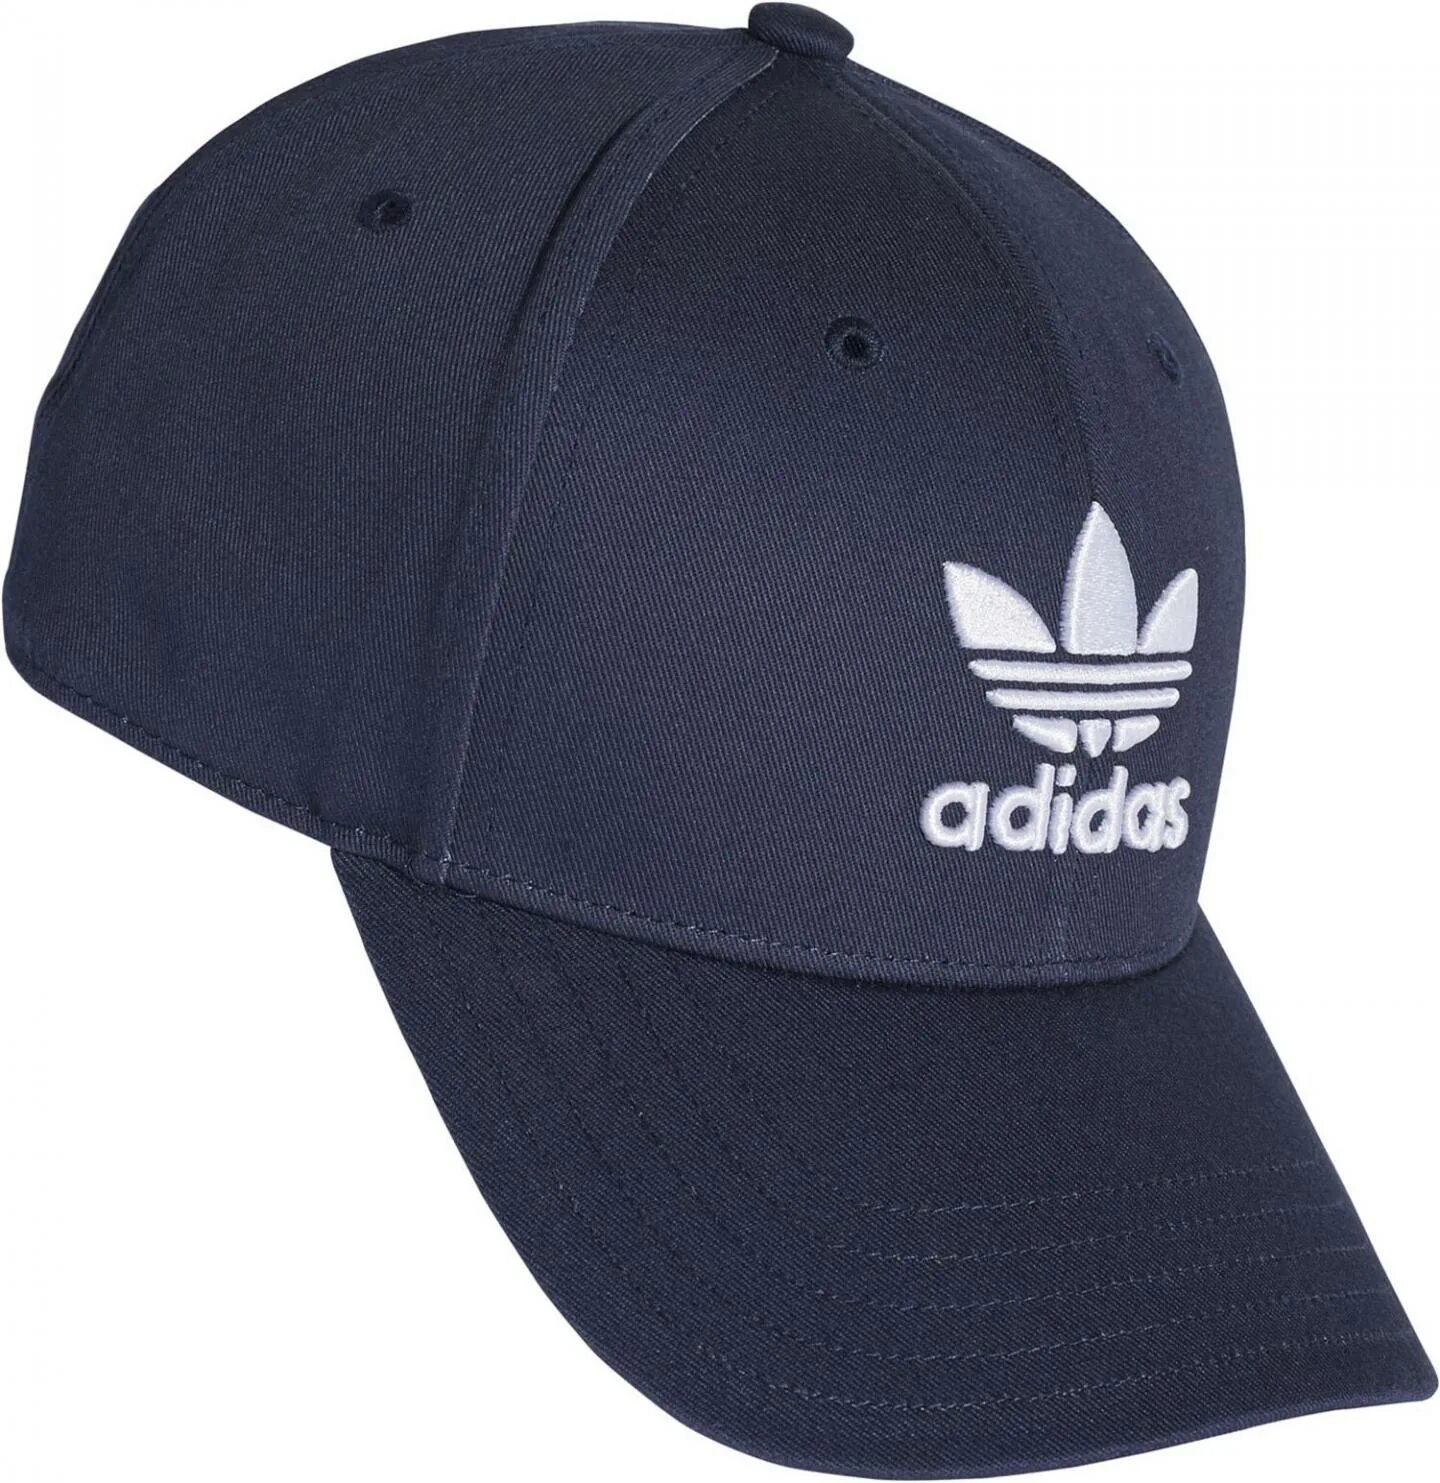 Adidas NSRC cap.